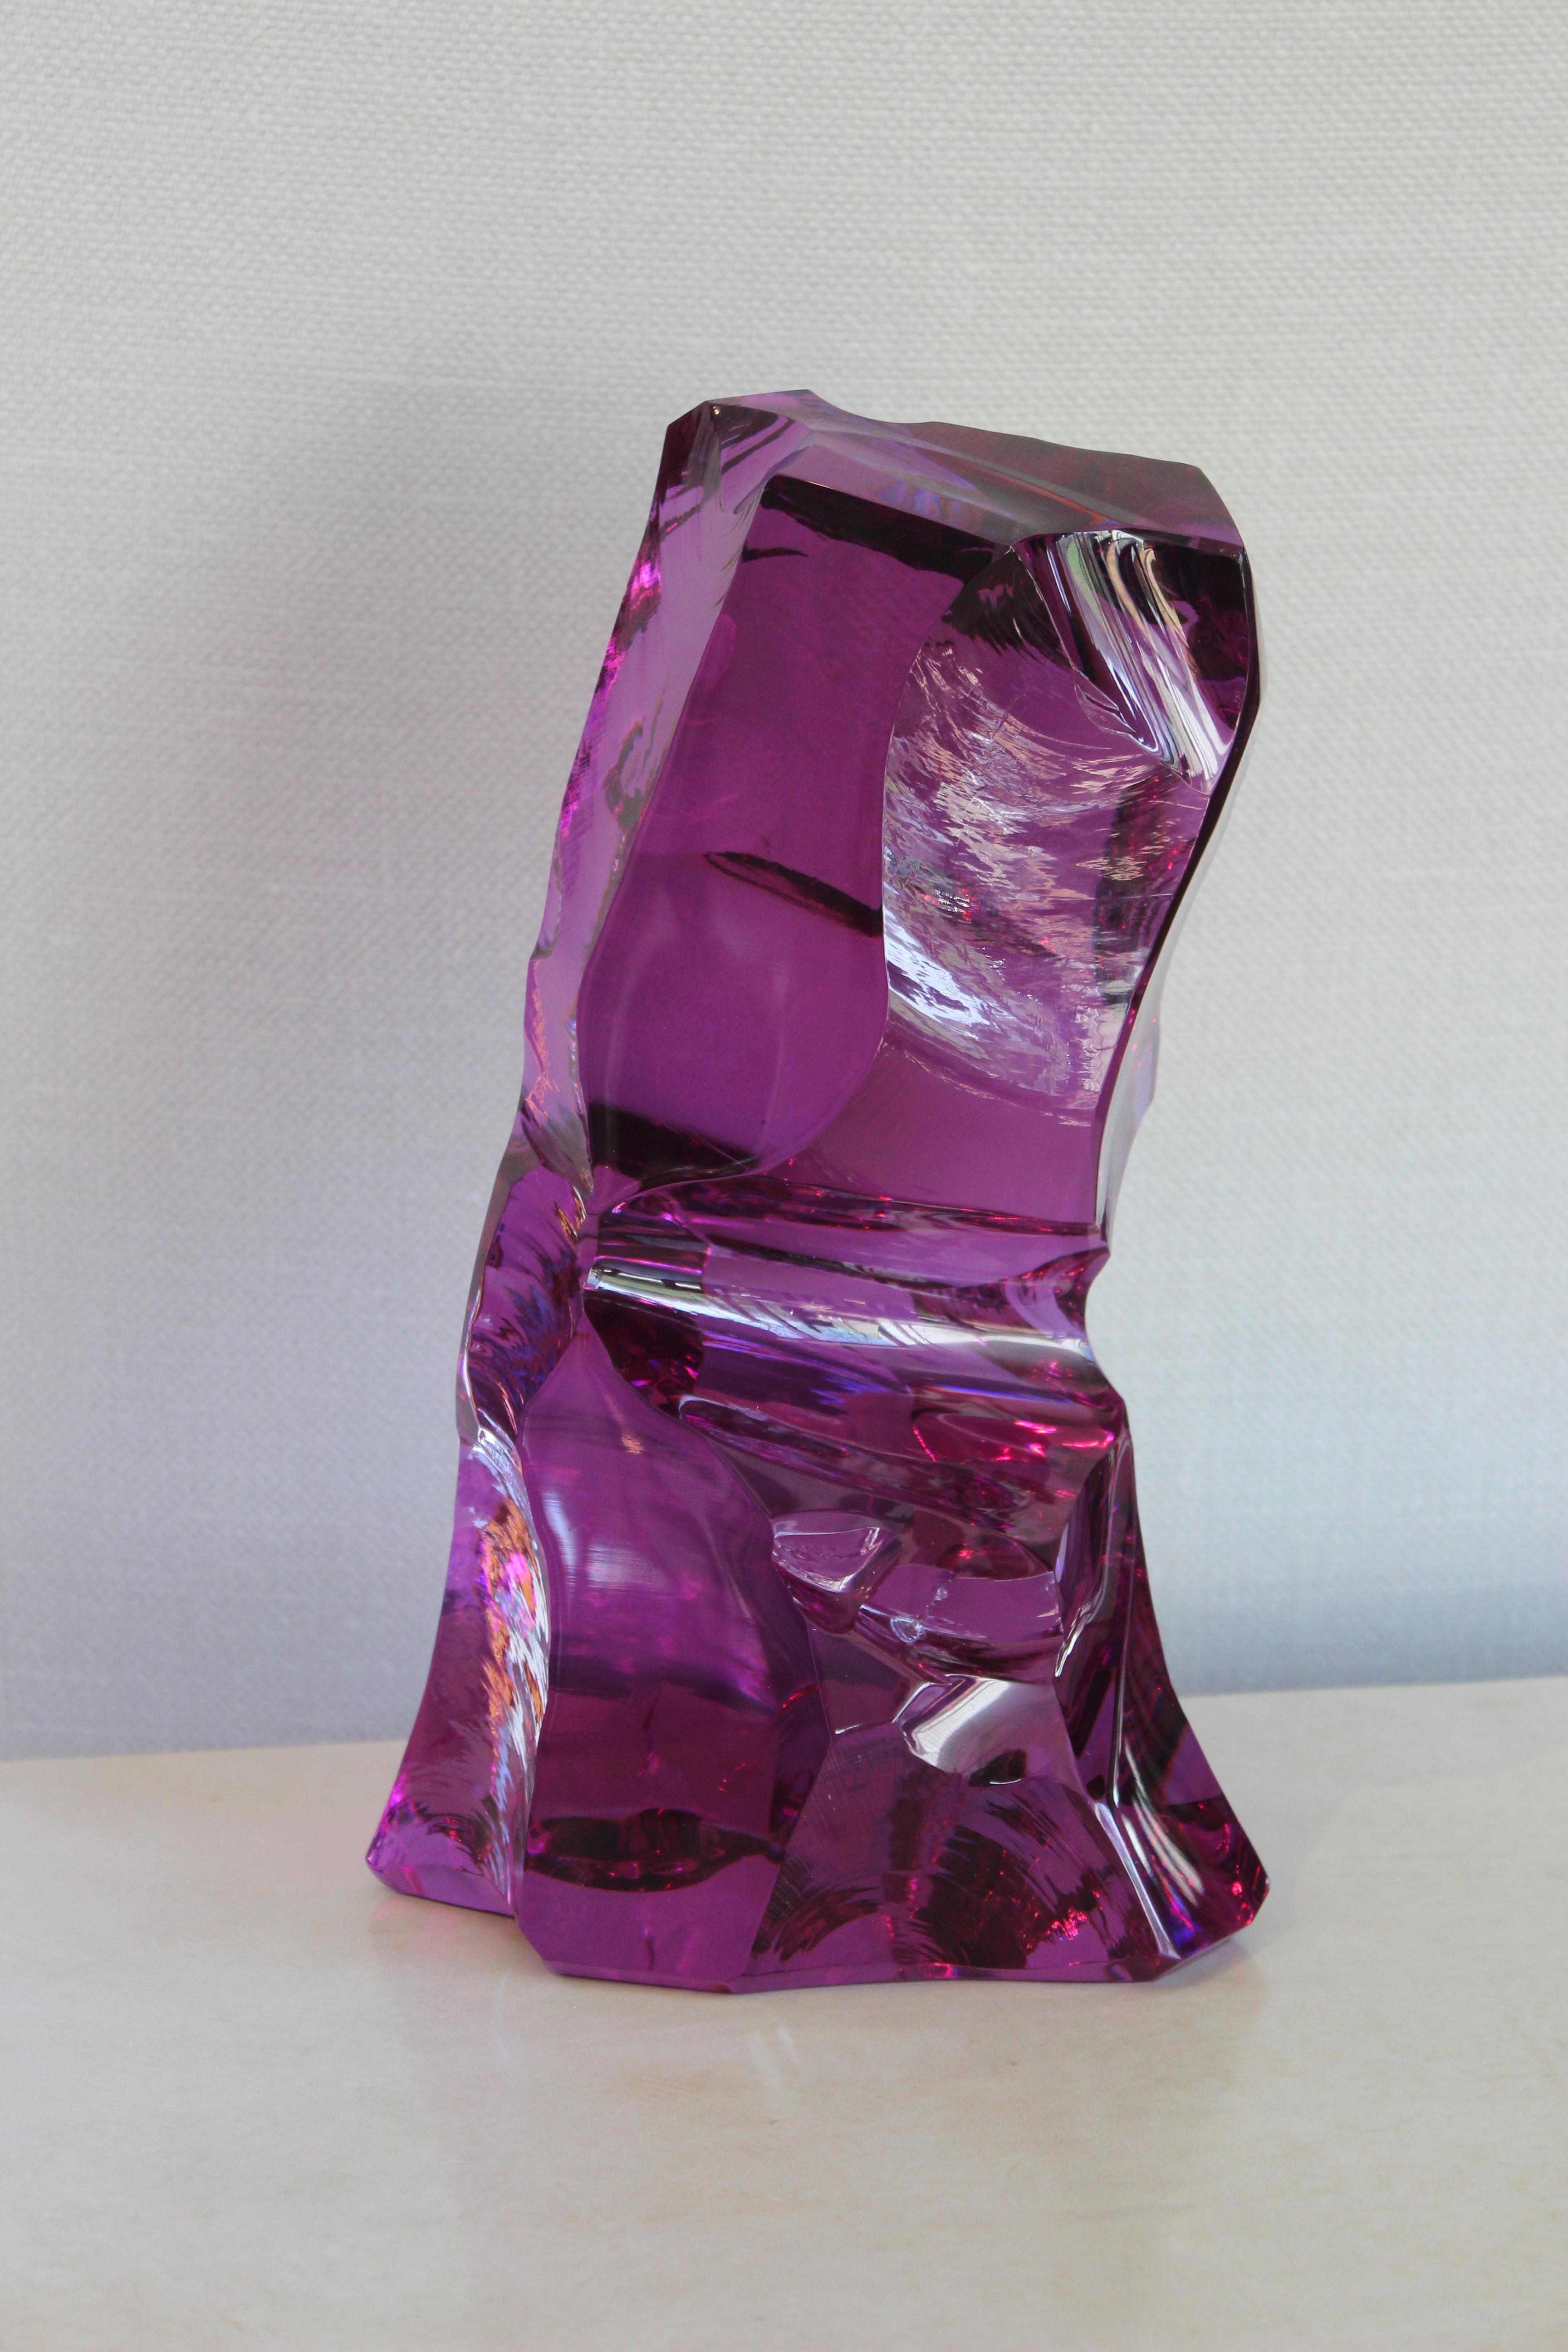 French Modern Purple Baccarat Glass Sculpture